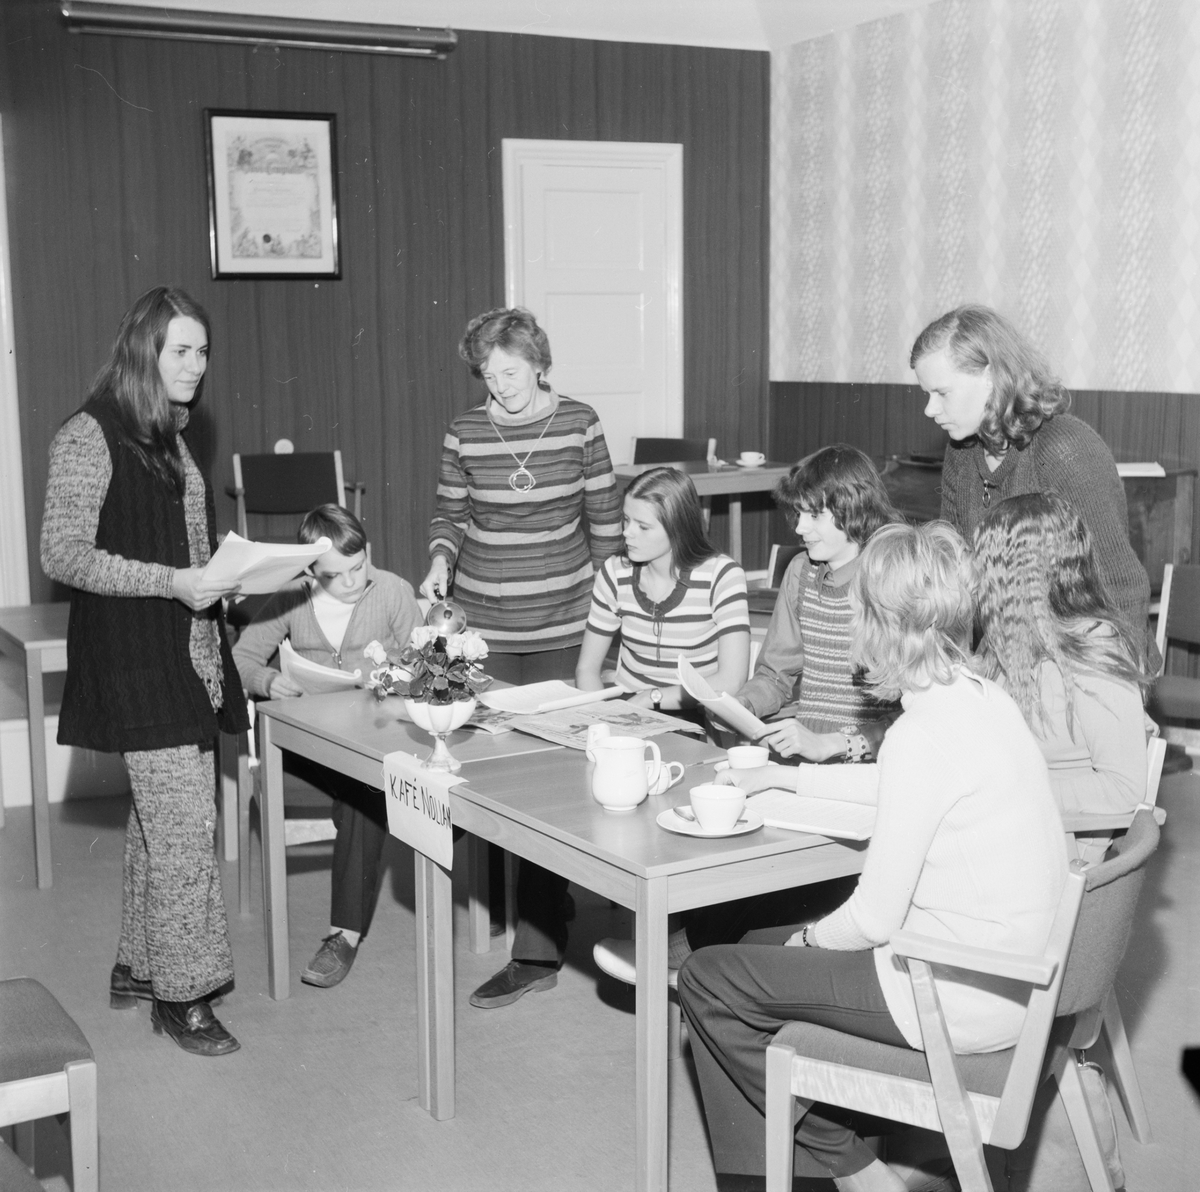 IOGT-NTO, teaterkurs i Tierp, Uppland, november 1971